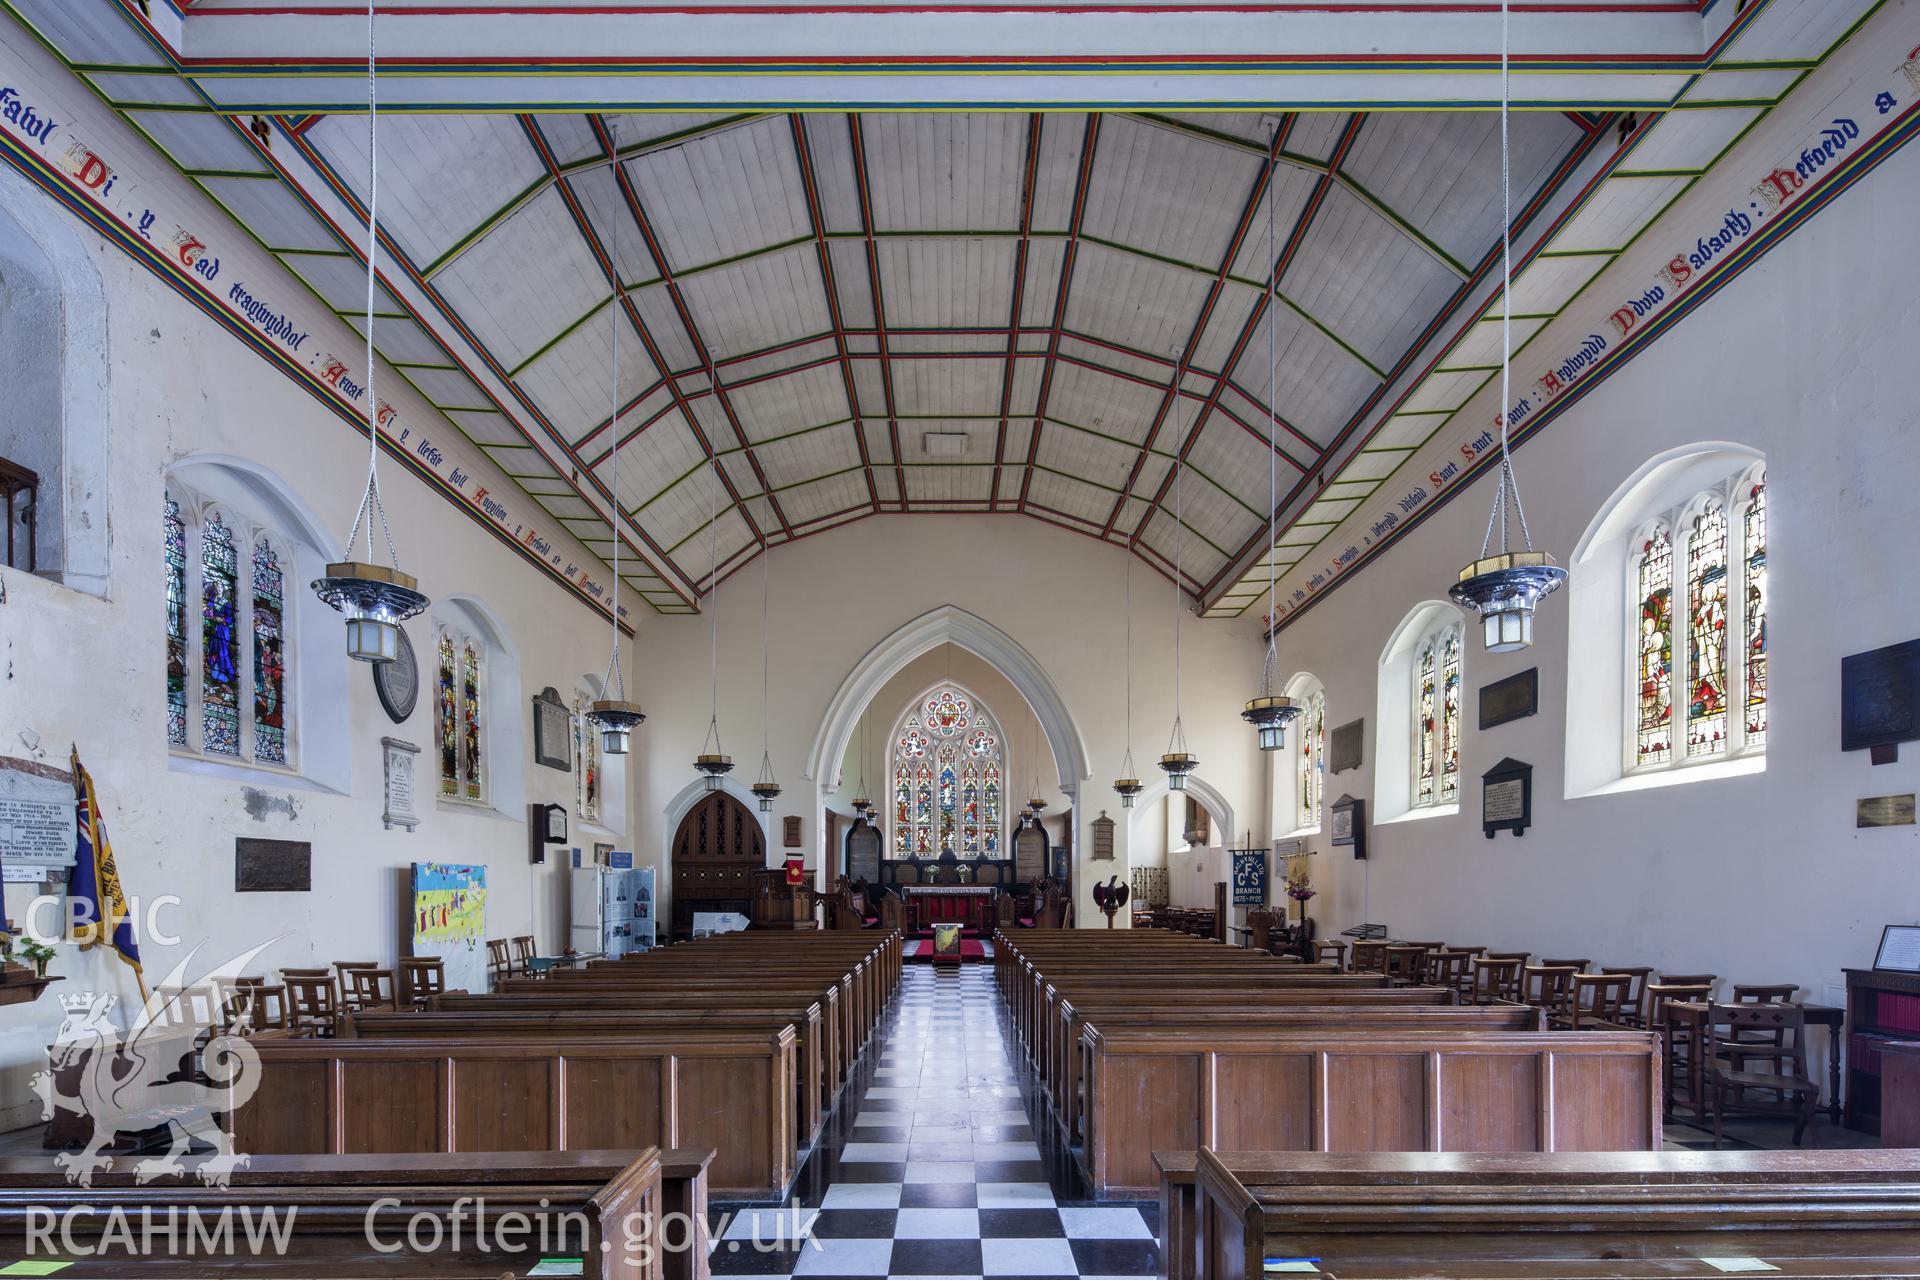 Digital photographs of St Peter's Church.